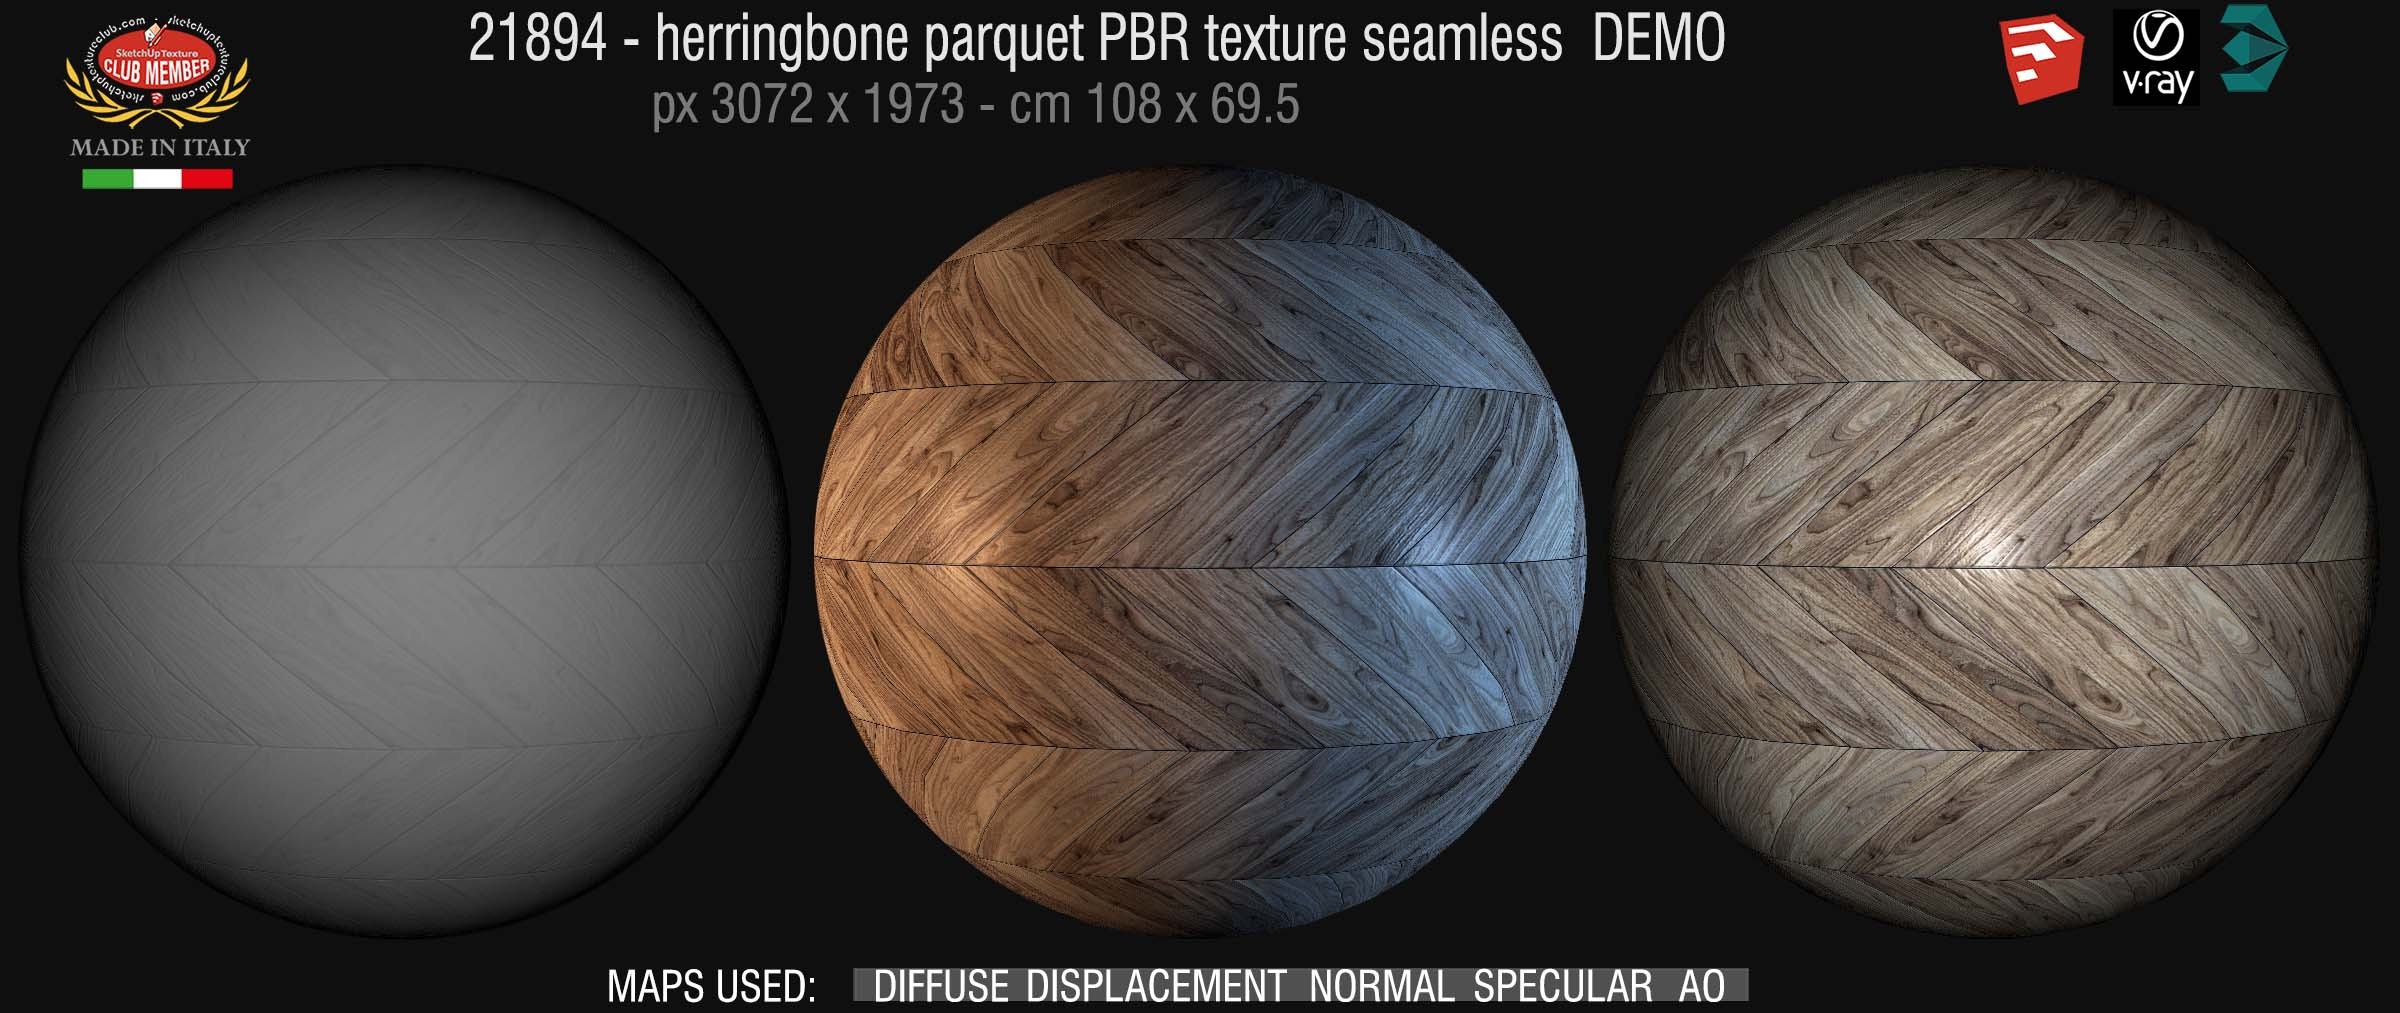 21894 herringbone parquet PBR texture seamless DEMO